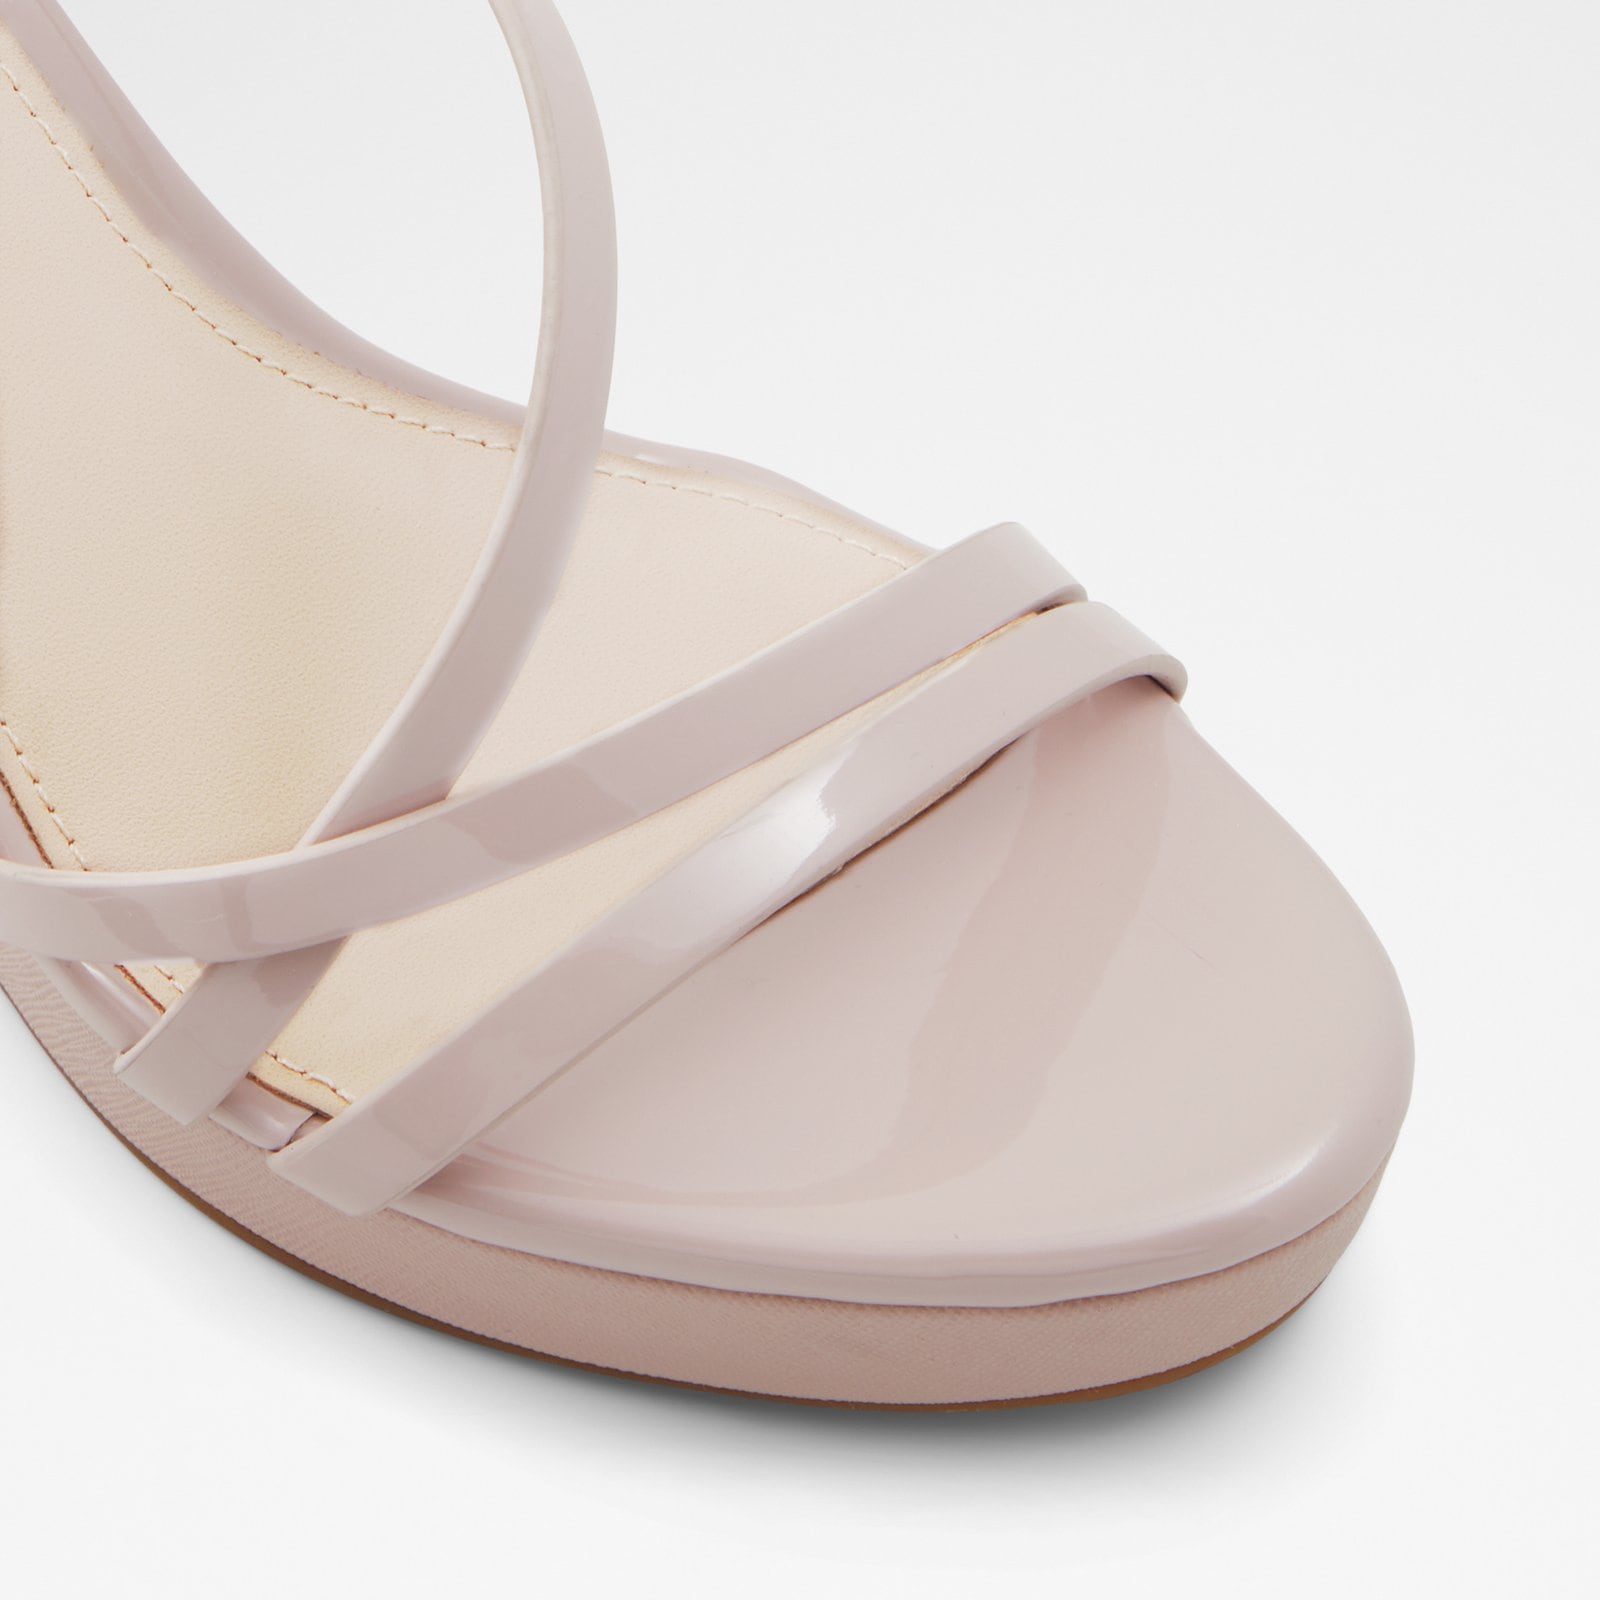 Prerranna Women Shoes - Light Pink - ALDO KSA